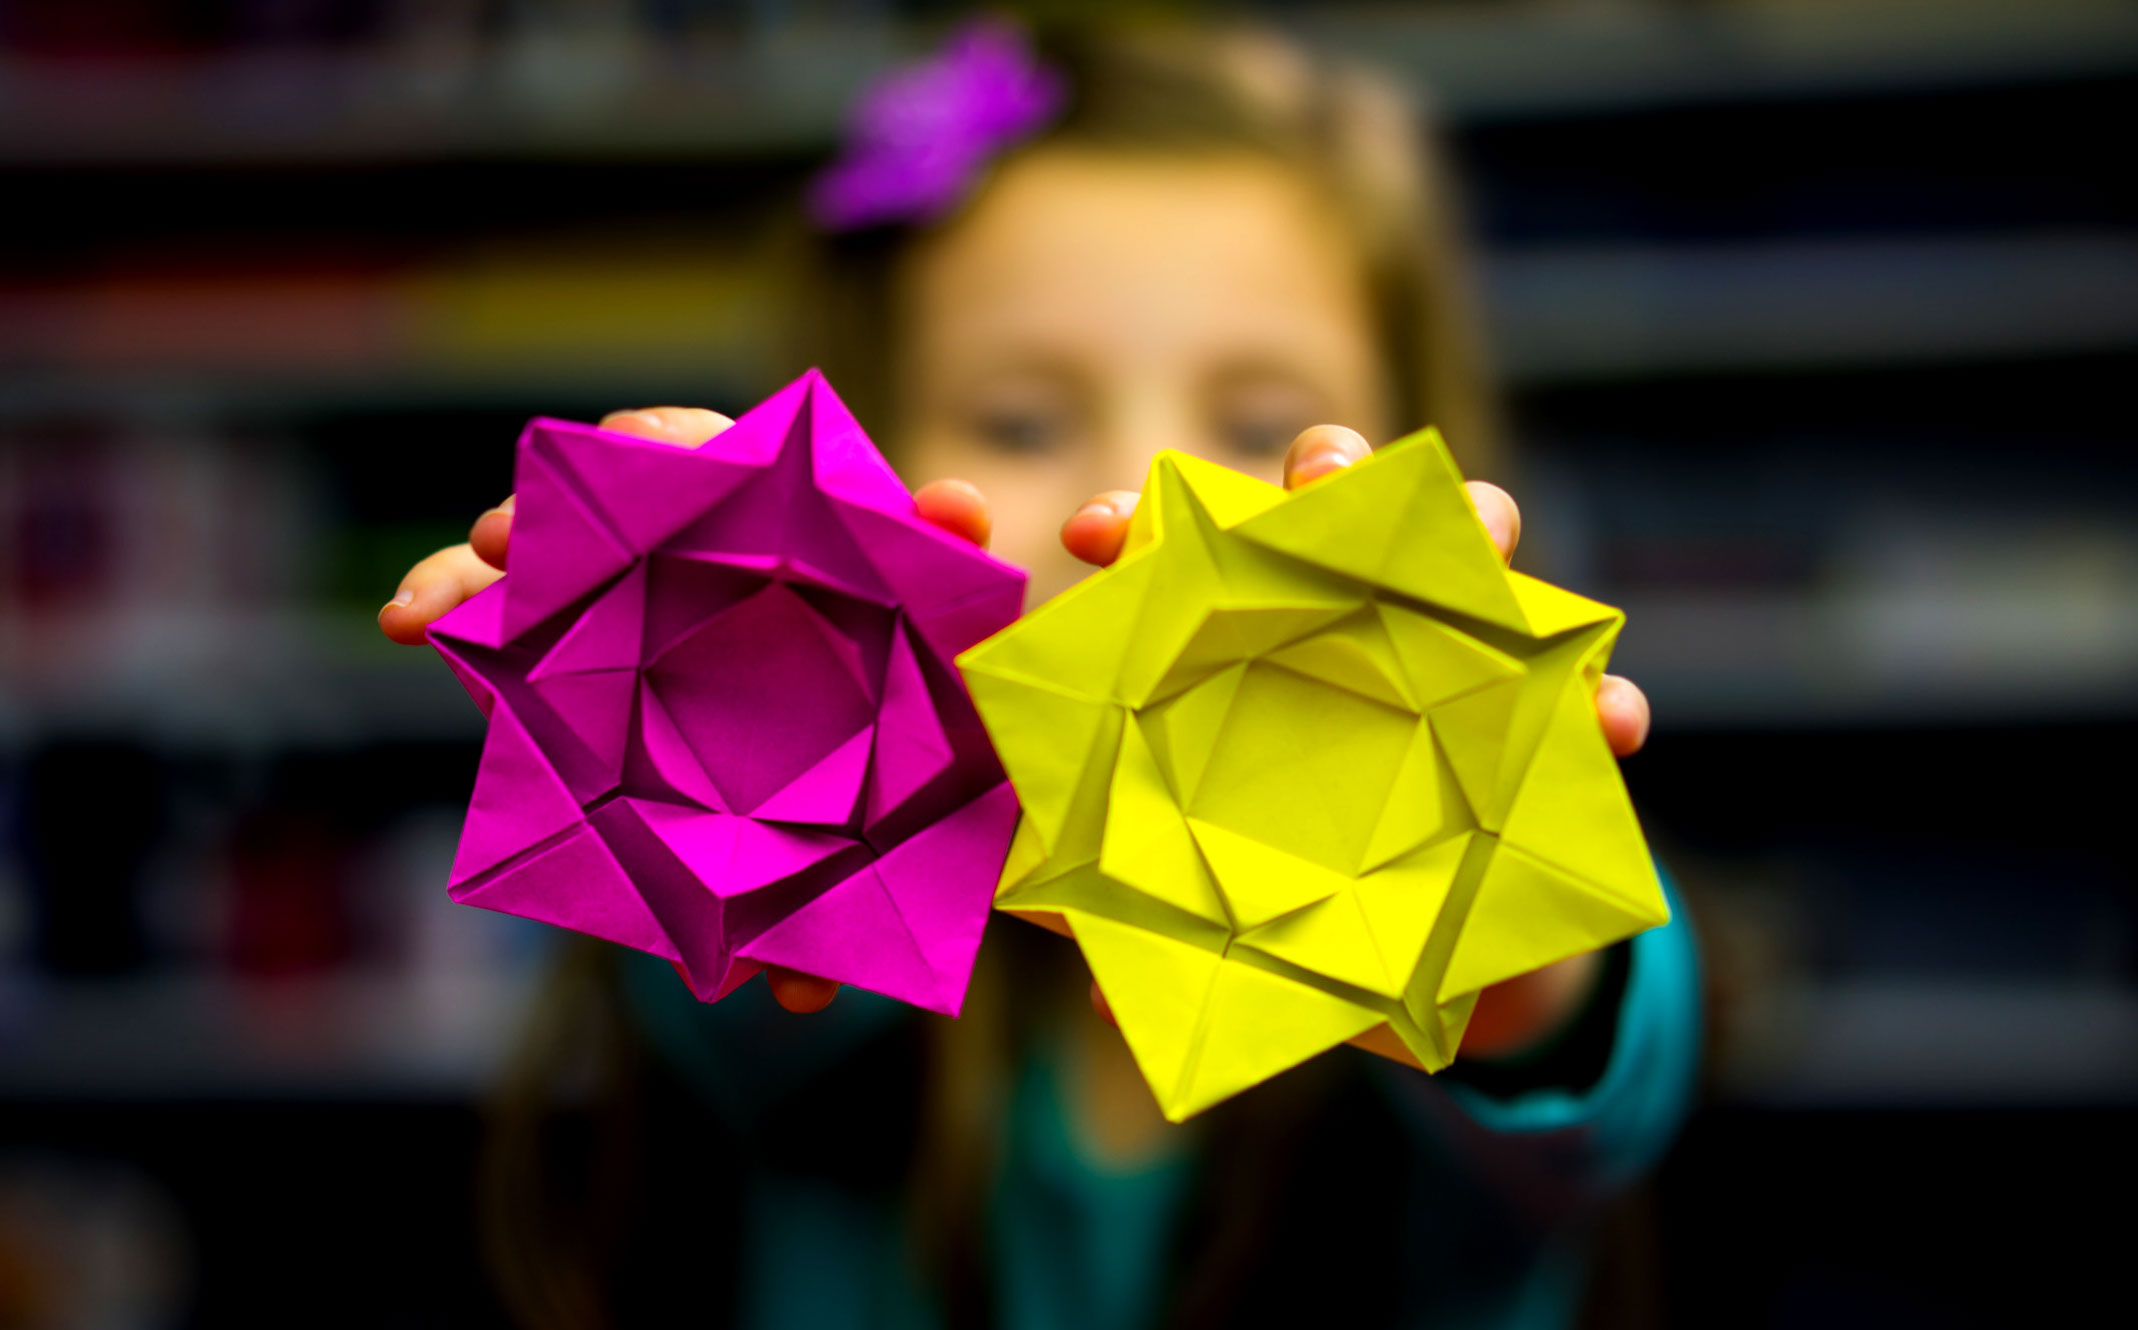 How To Fold An Easy Origami Flower - Art For Kids Hub - 2138 x 1330 jpeg 182kB